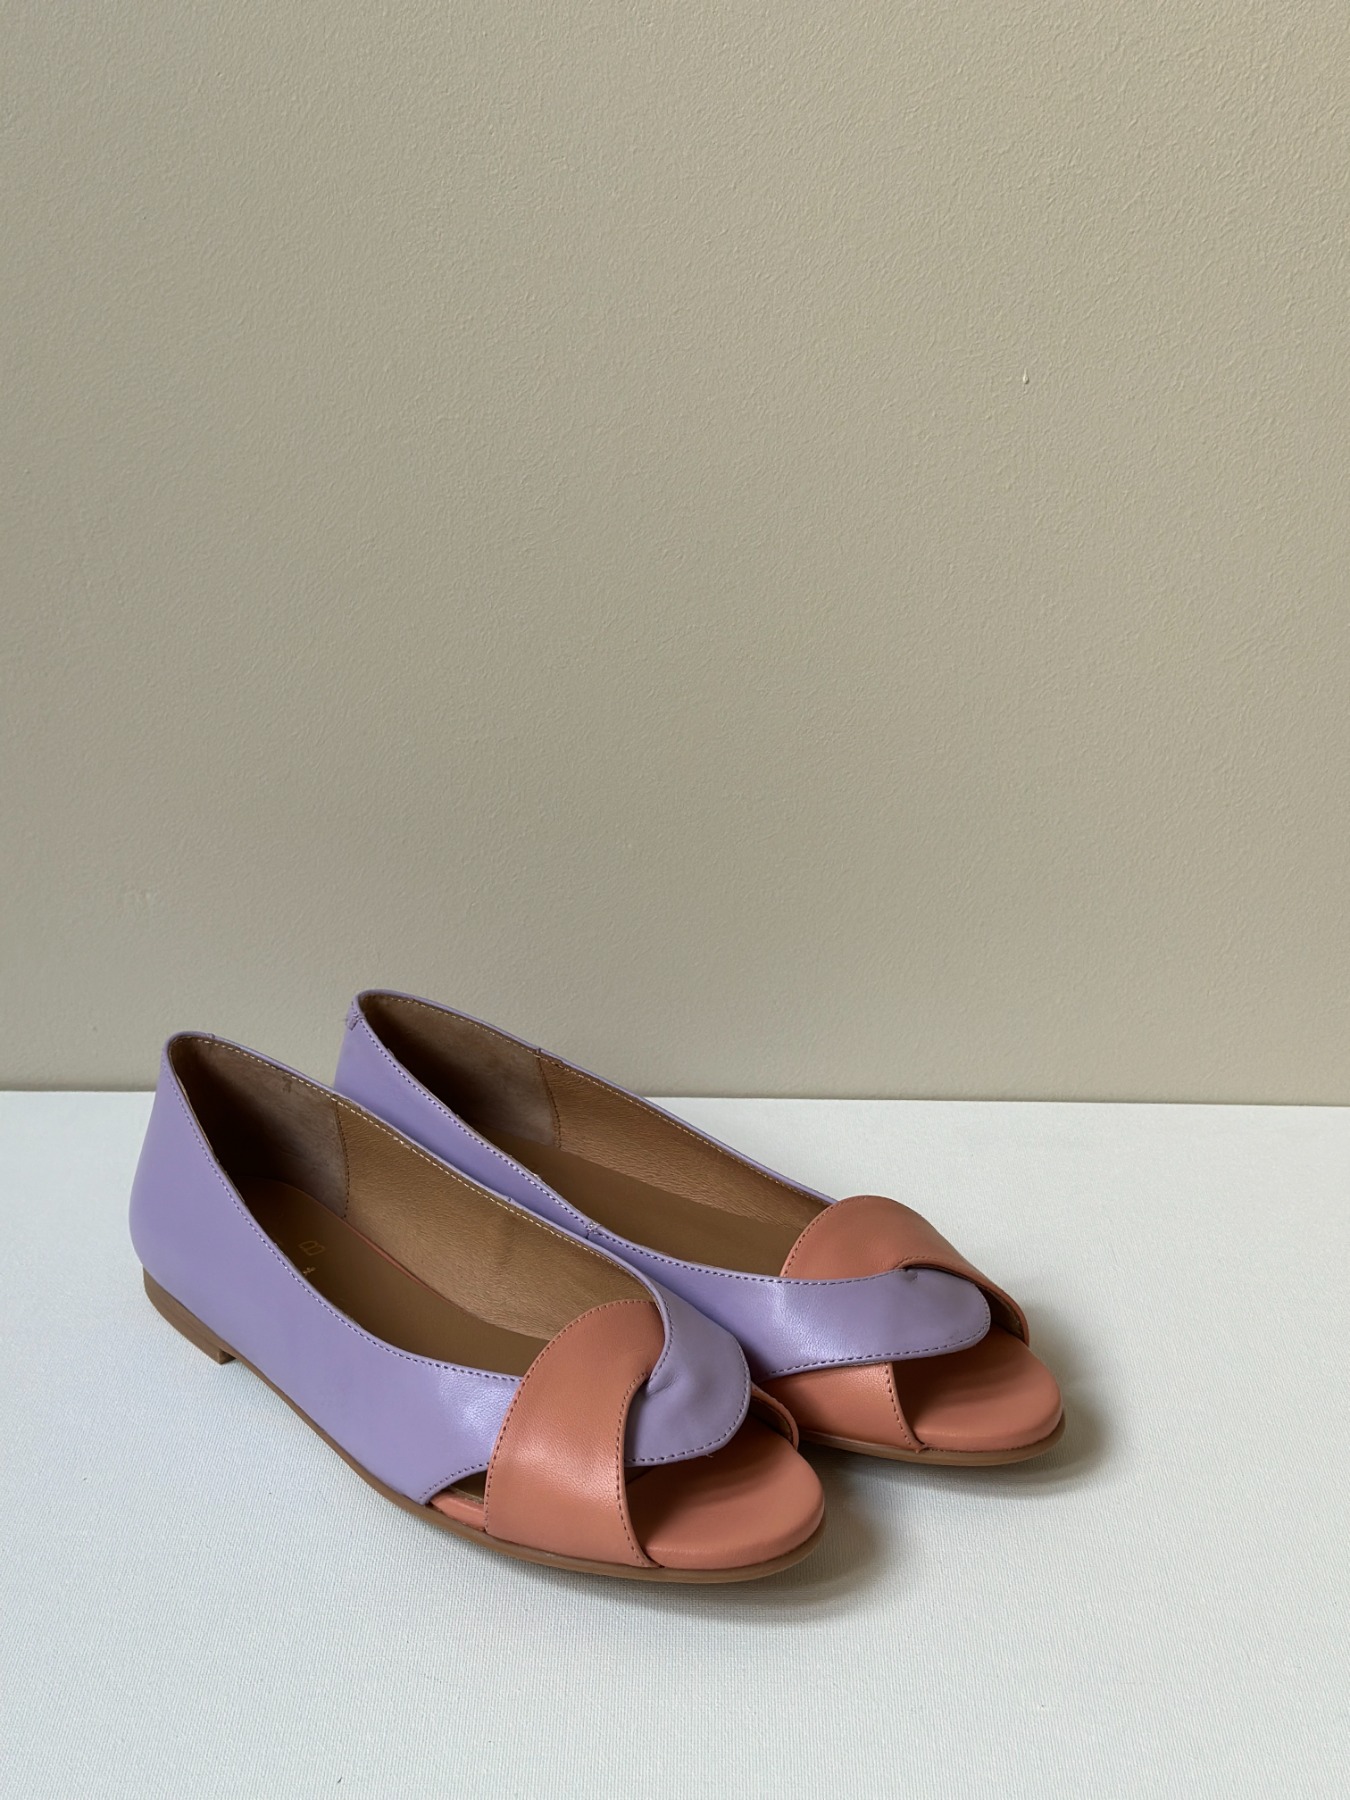 KMB Shoes - Ballerina SOFIE - Apricot/Lila